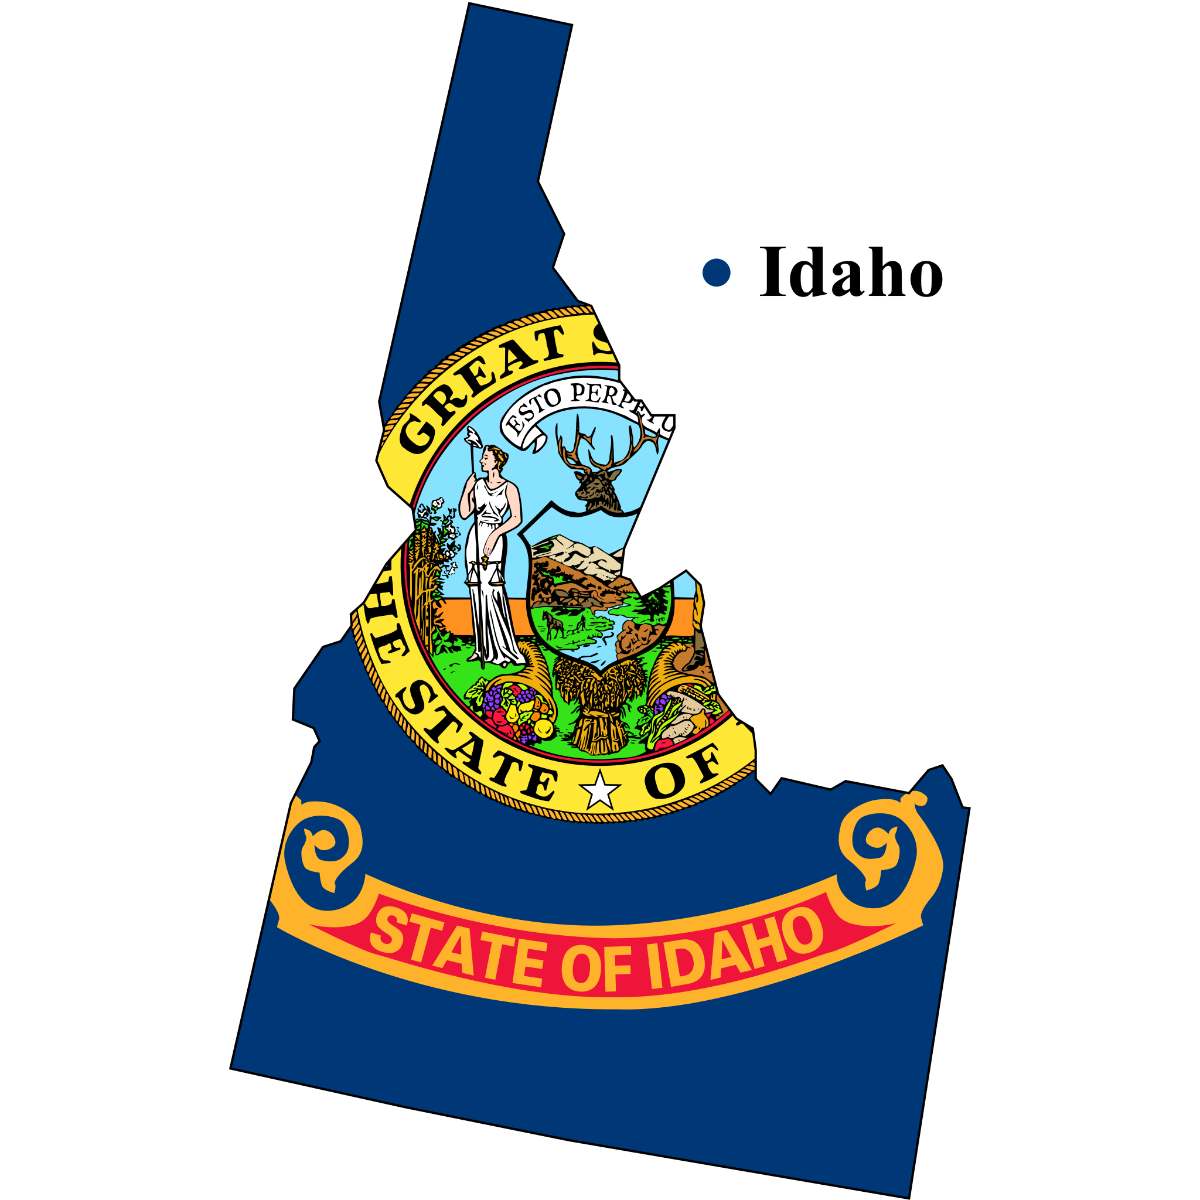 Idaho State map cutout with Idaho flag superimposed